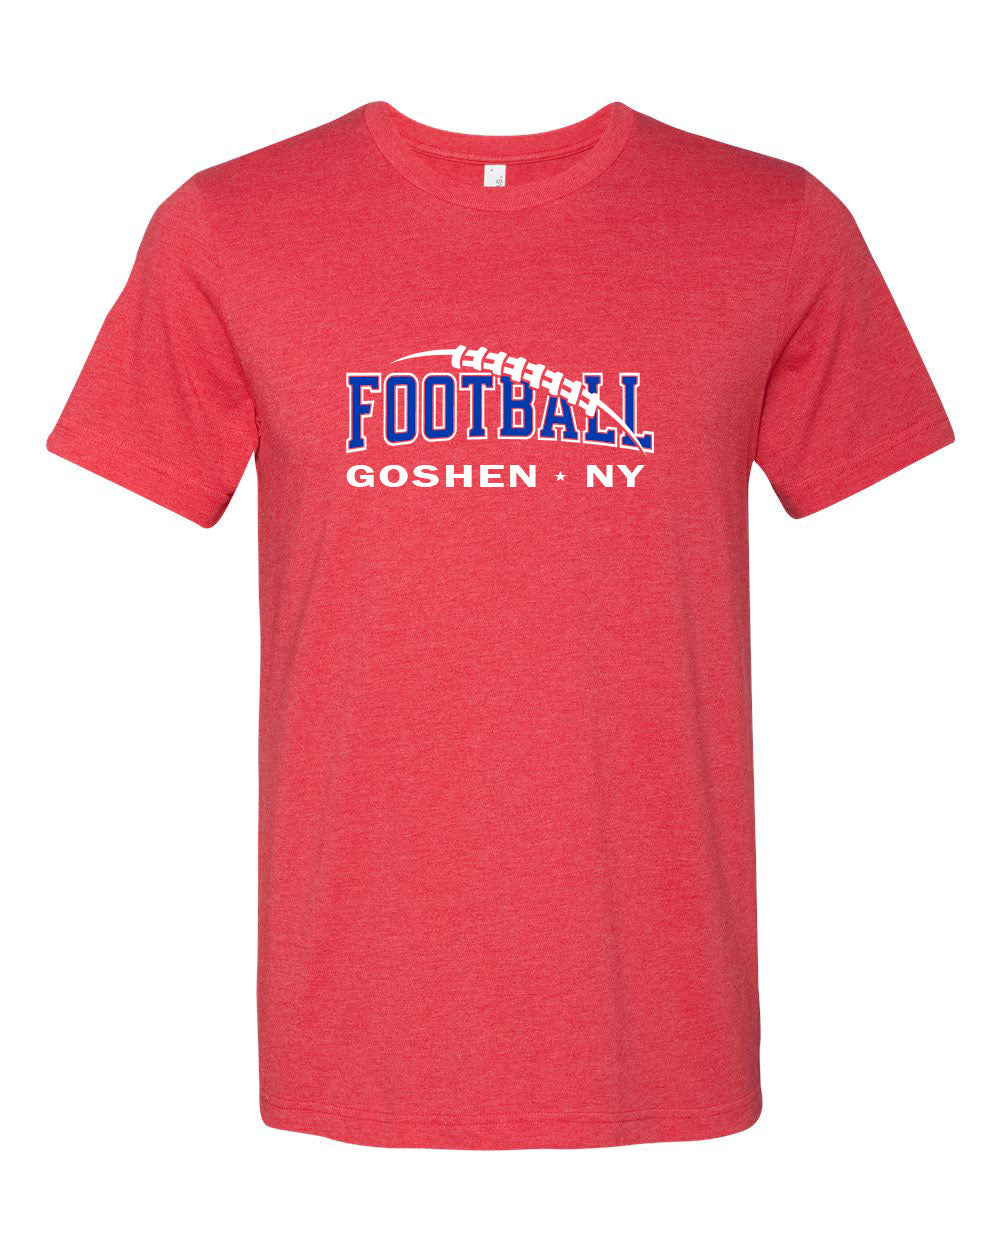 Goshen Football Design 2 t-Shirt